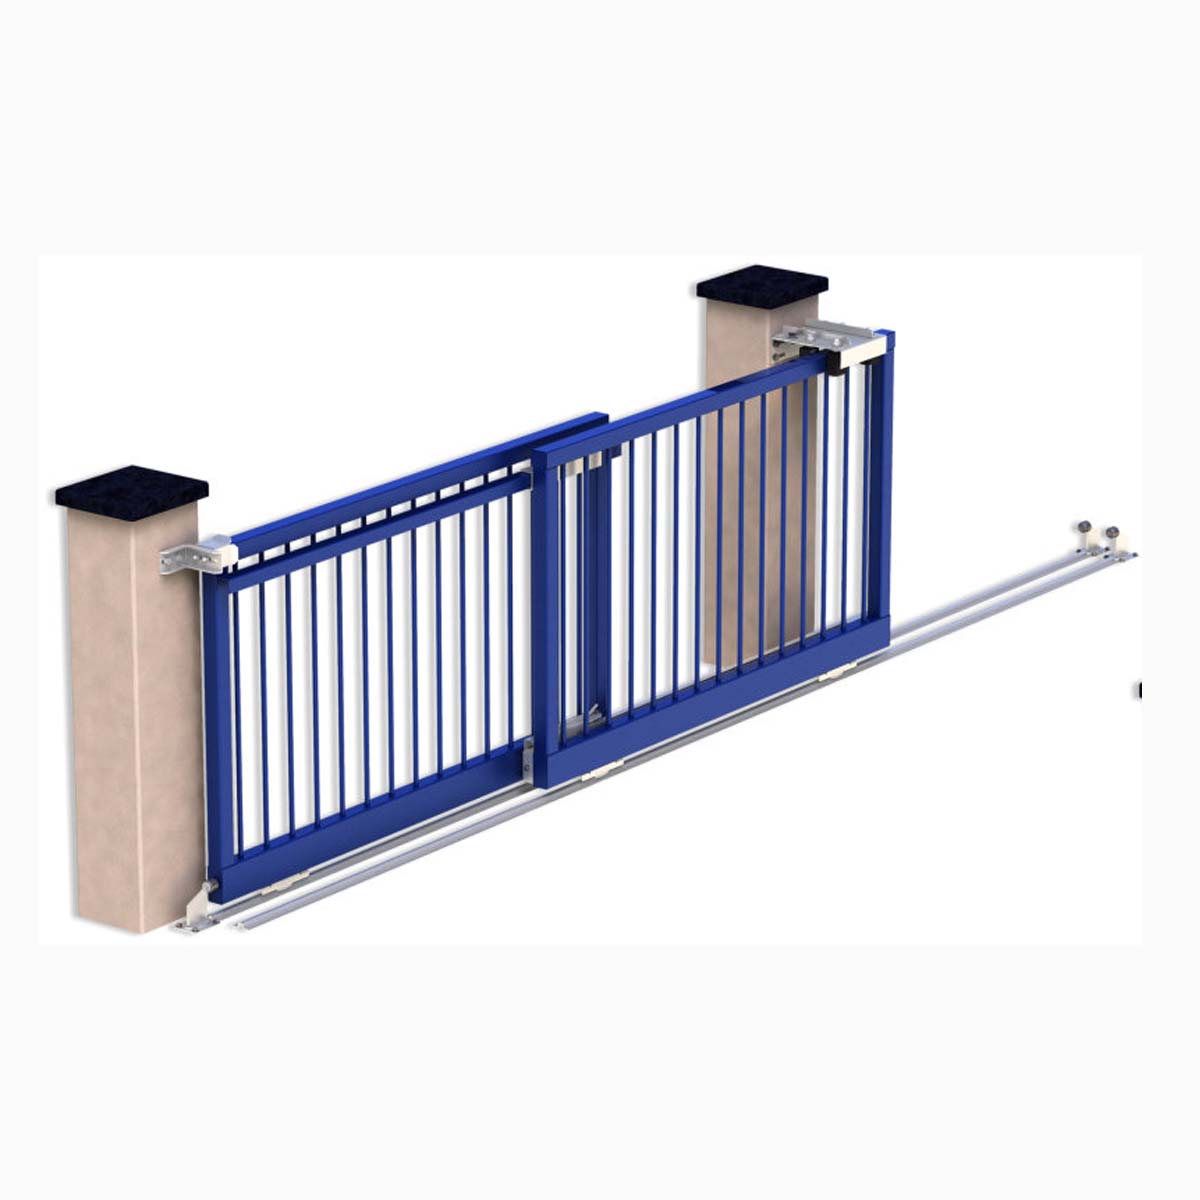 Cantilever Gate Hardware for medium gates Cantilever Gate Upper Guide Roller 